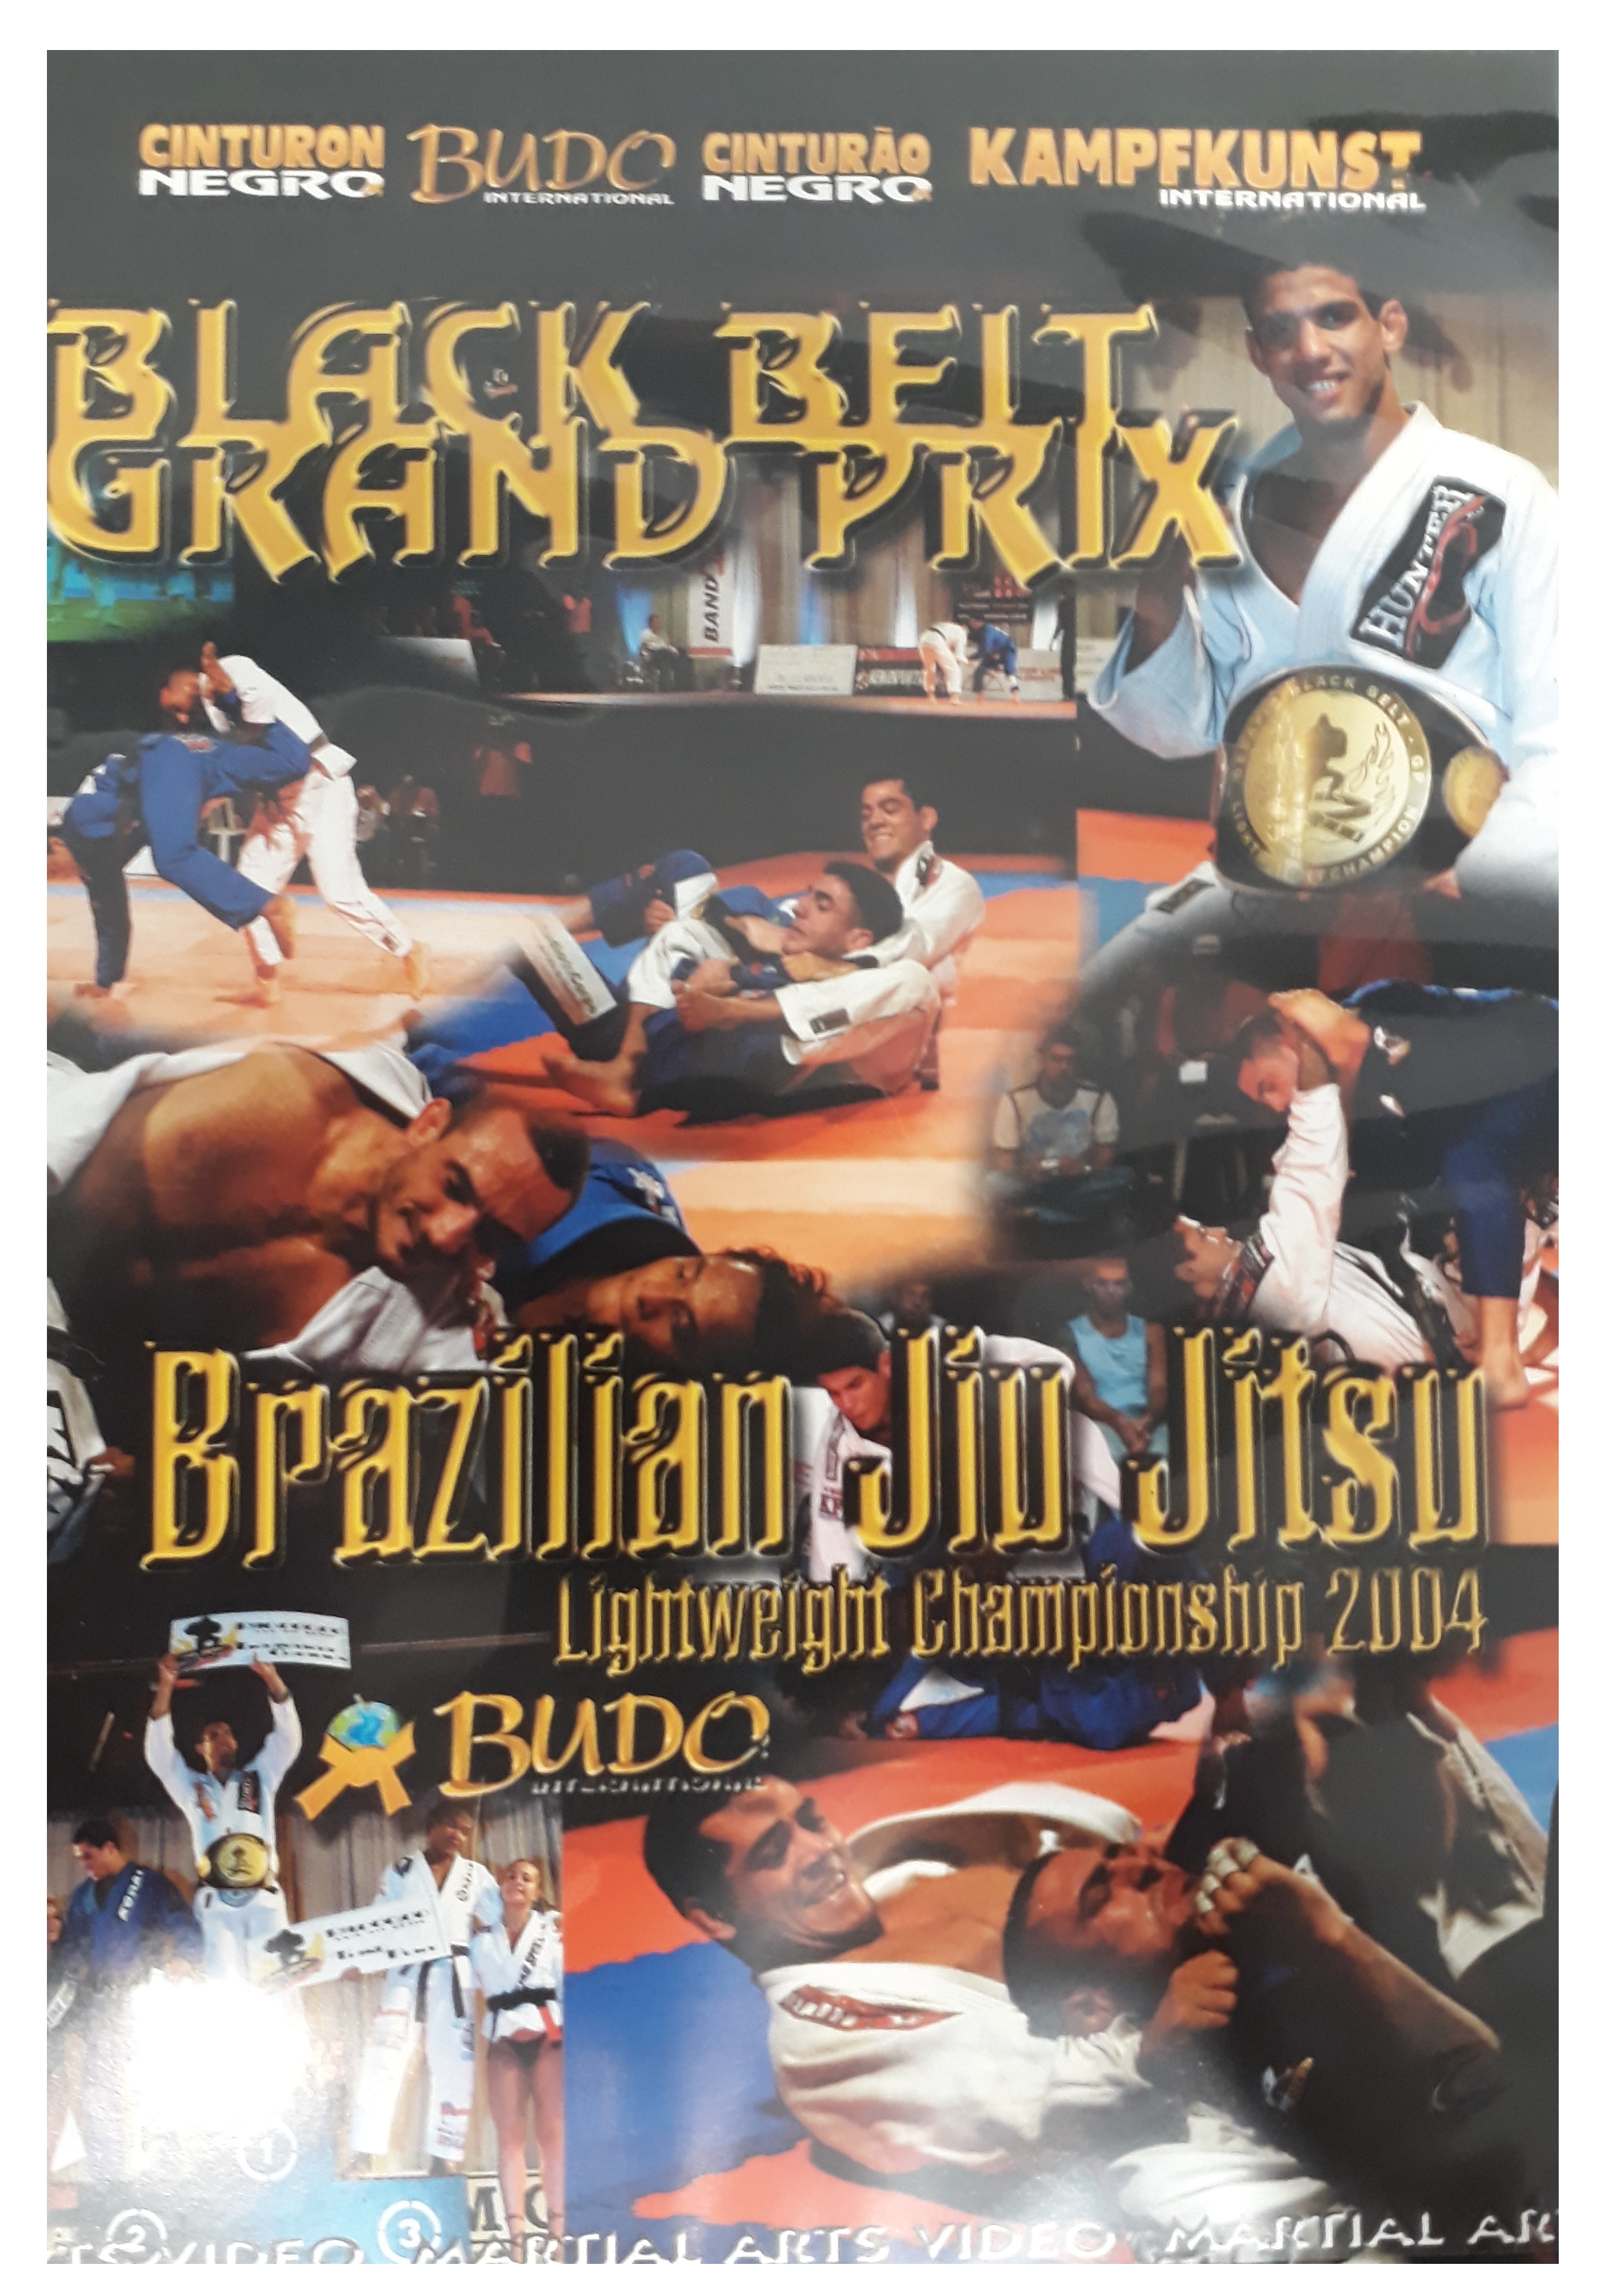 DVD Brasilian Jiu Jiutsu (Black Belt Grand Prix) Lightweight Championship 2004